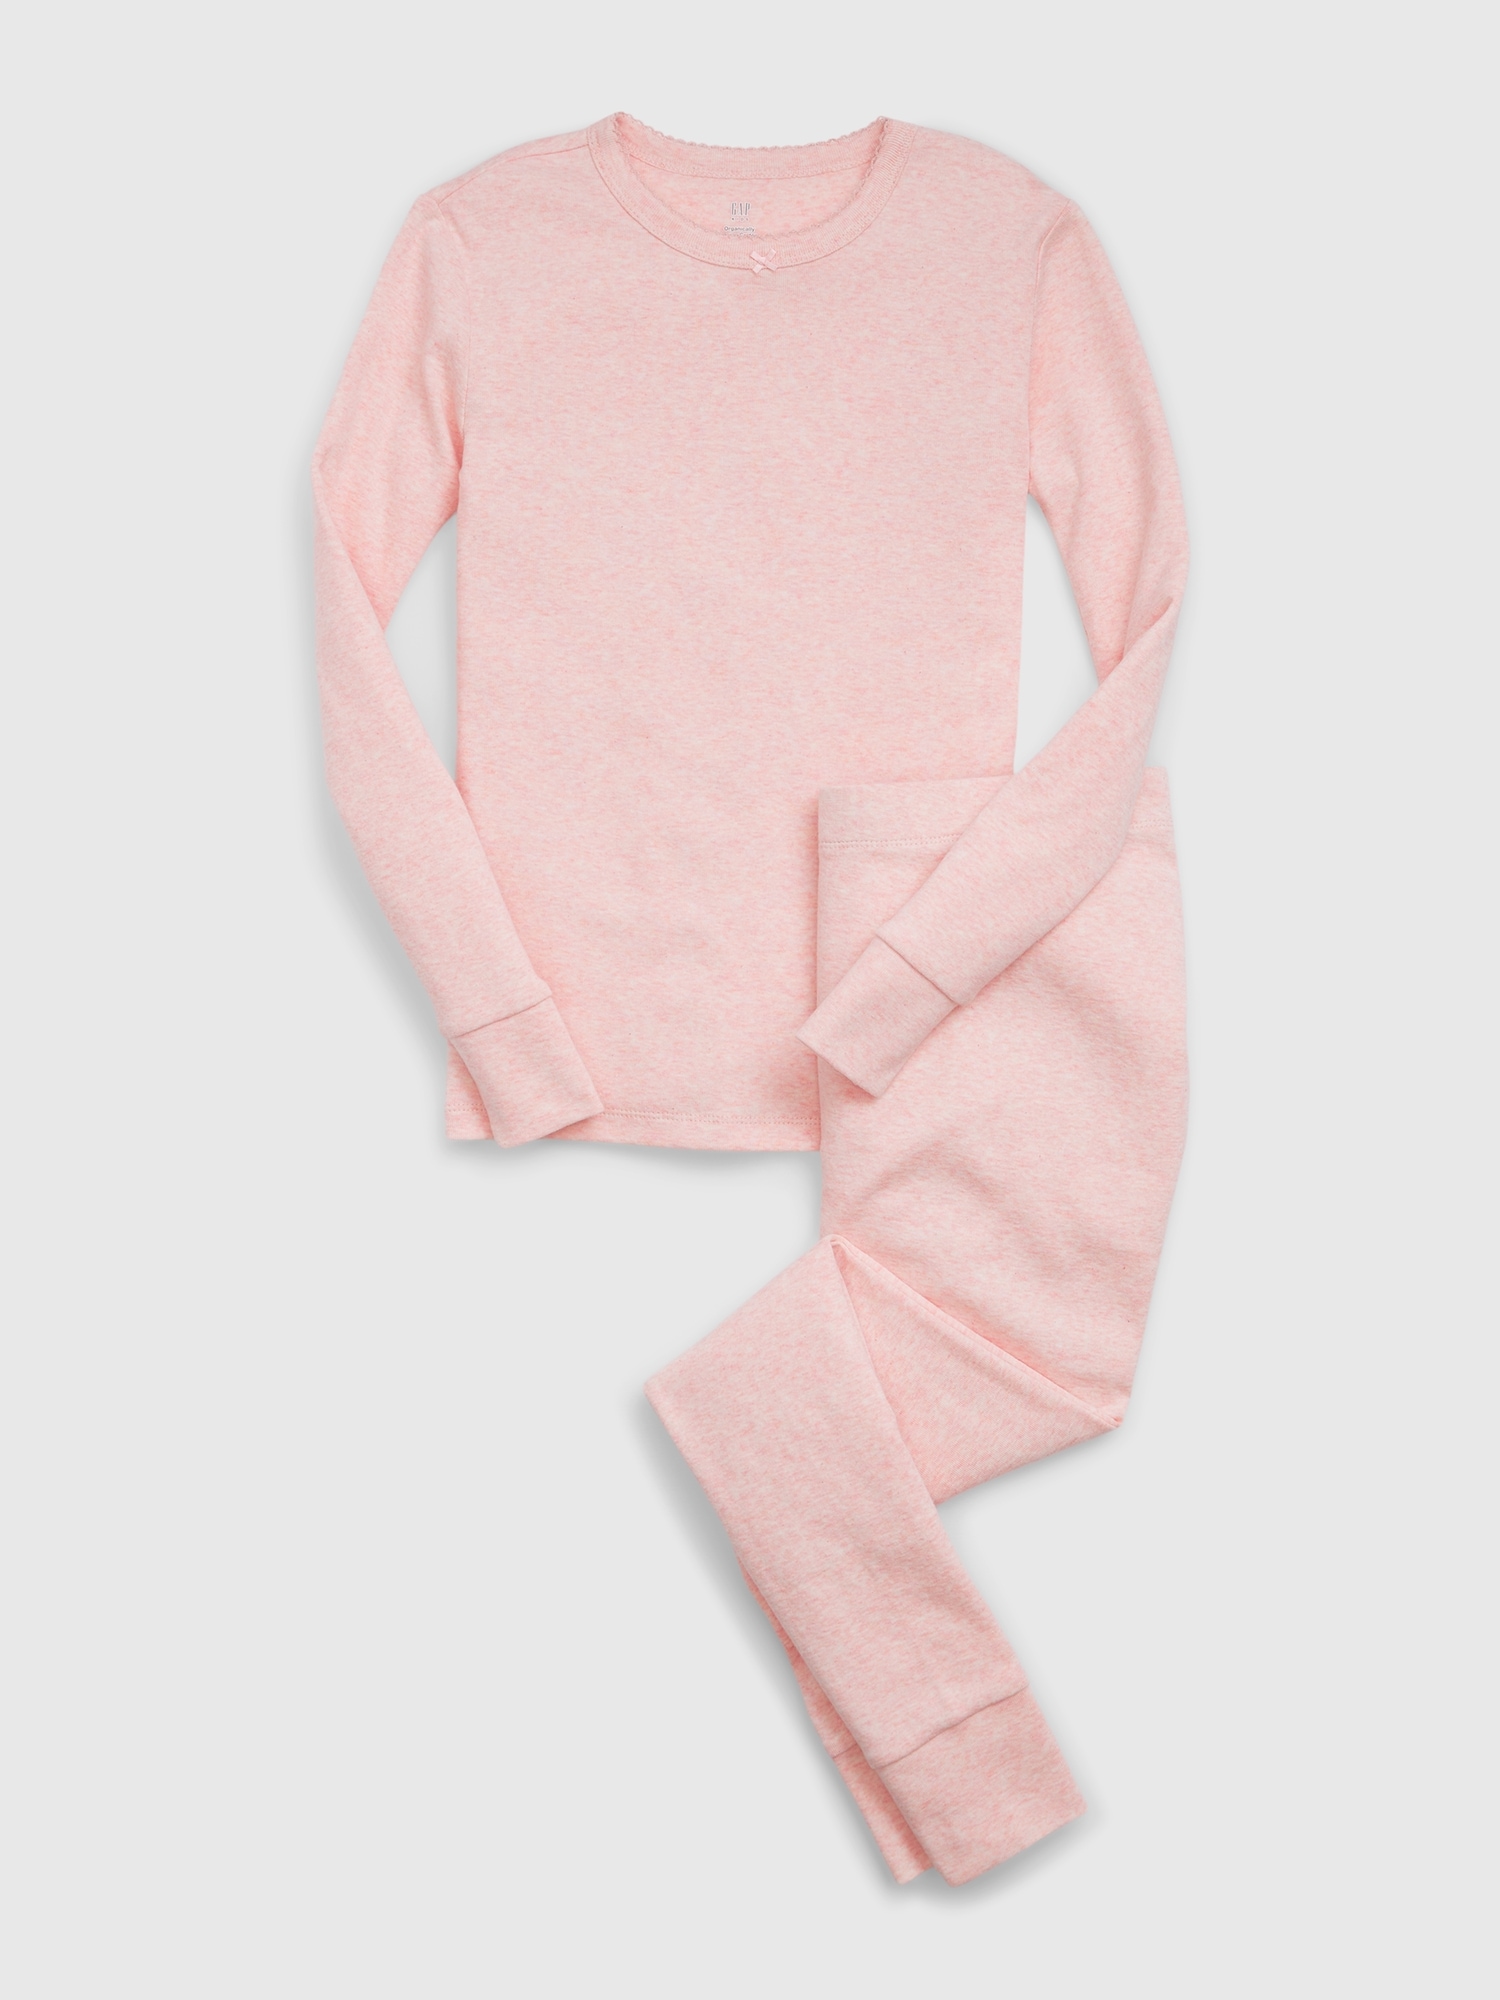 Boys and Girls Soft Organic Cotton Snug Fit Pajama Sets